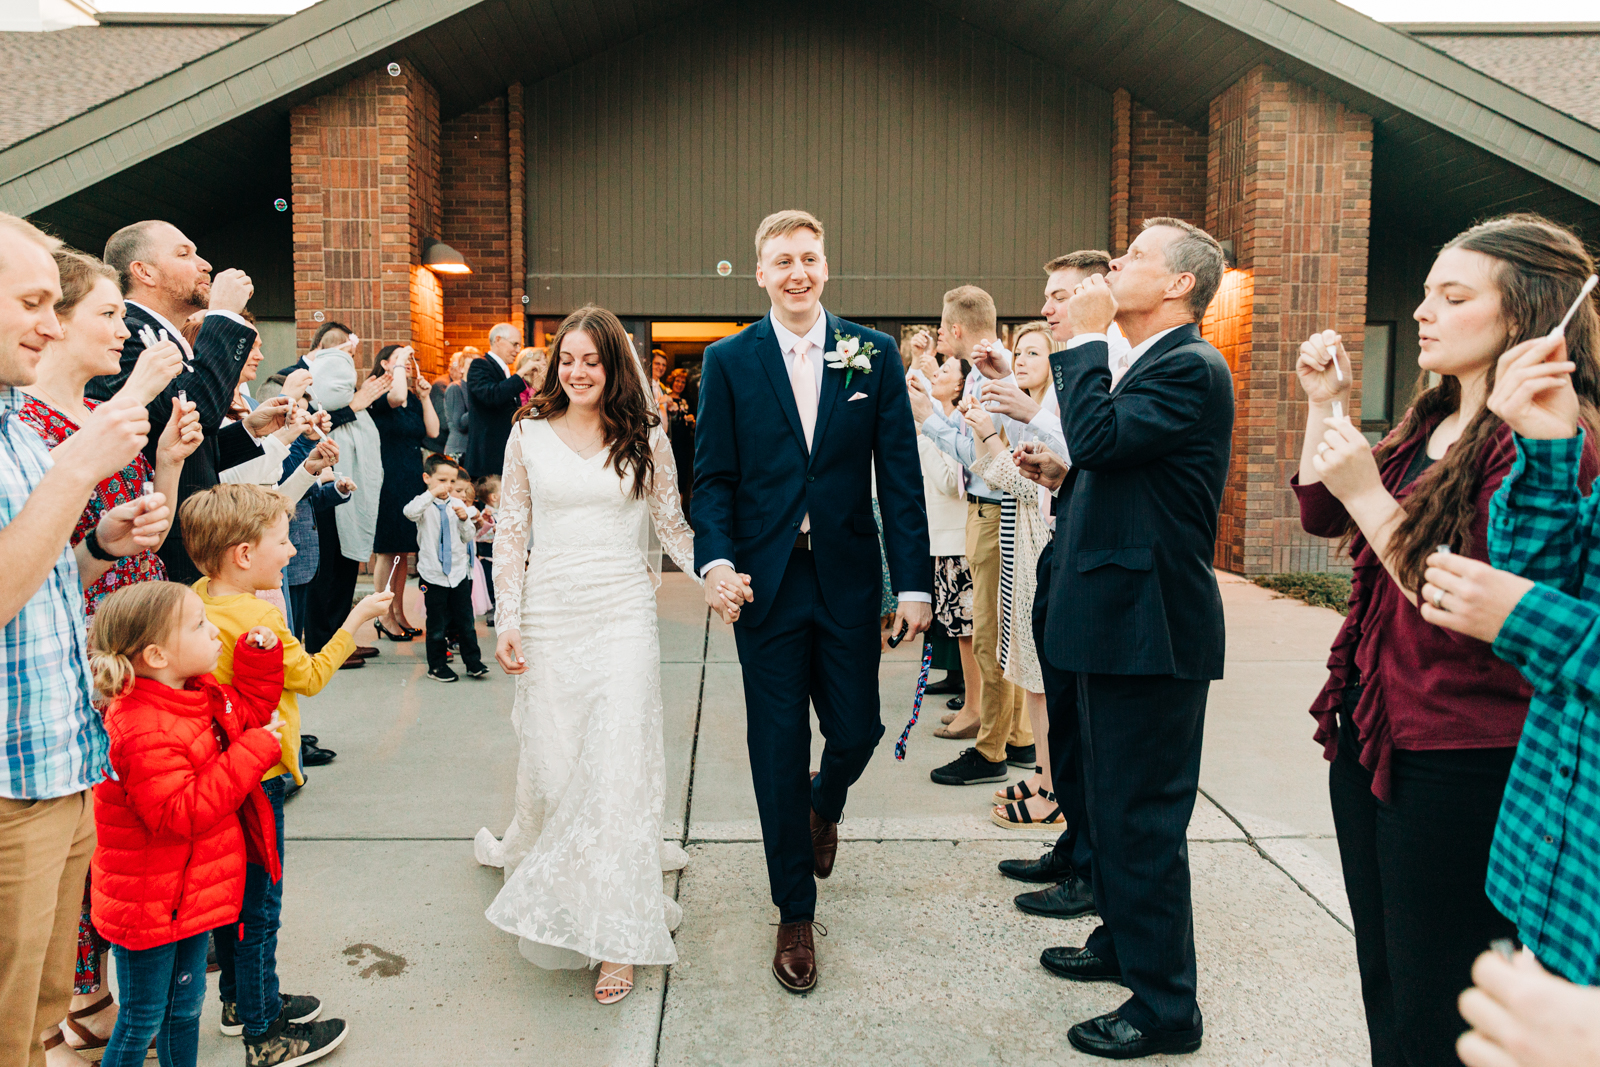 Jackson Hole wedding photographer captures bride and groom leaving snowy wedding reception hand in hand